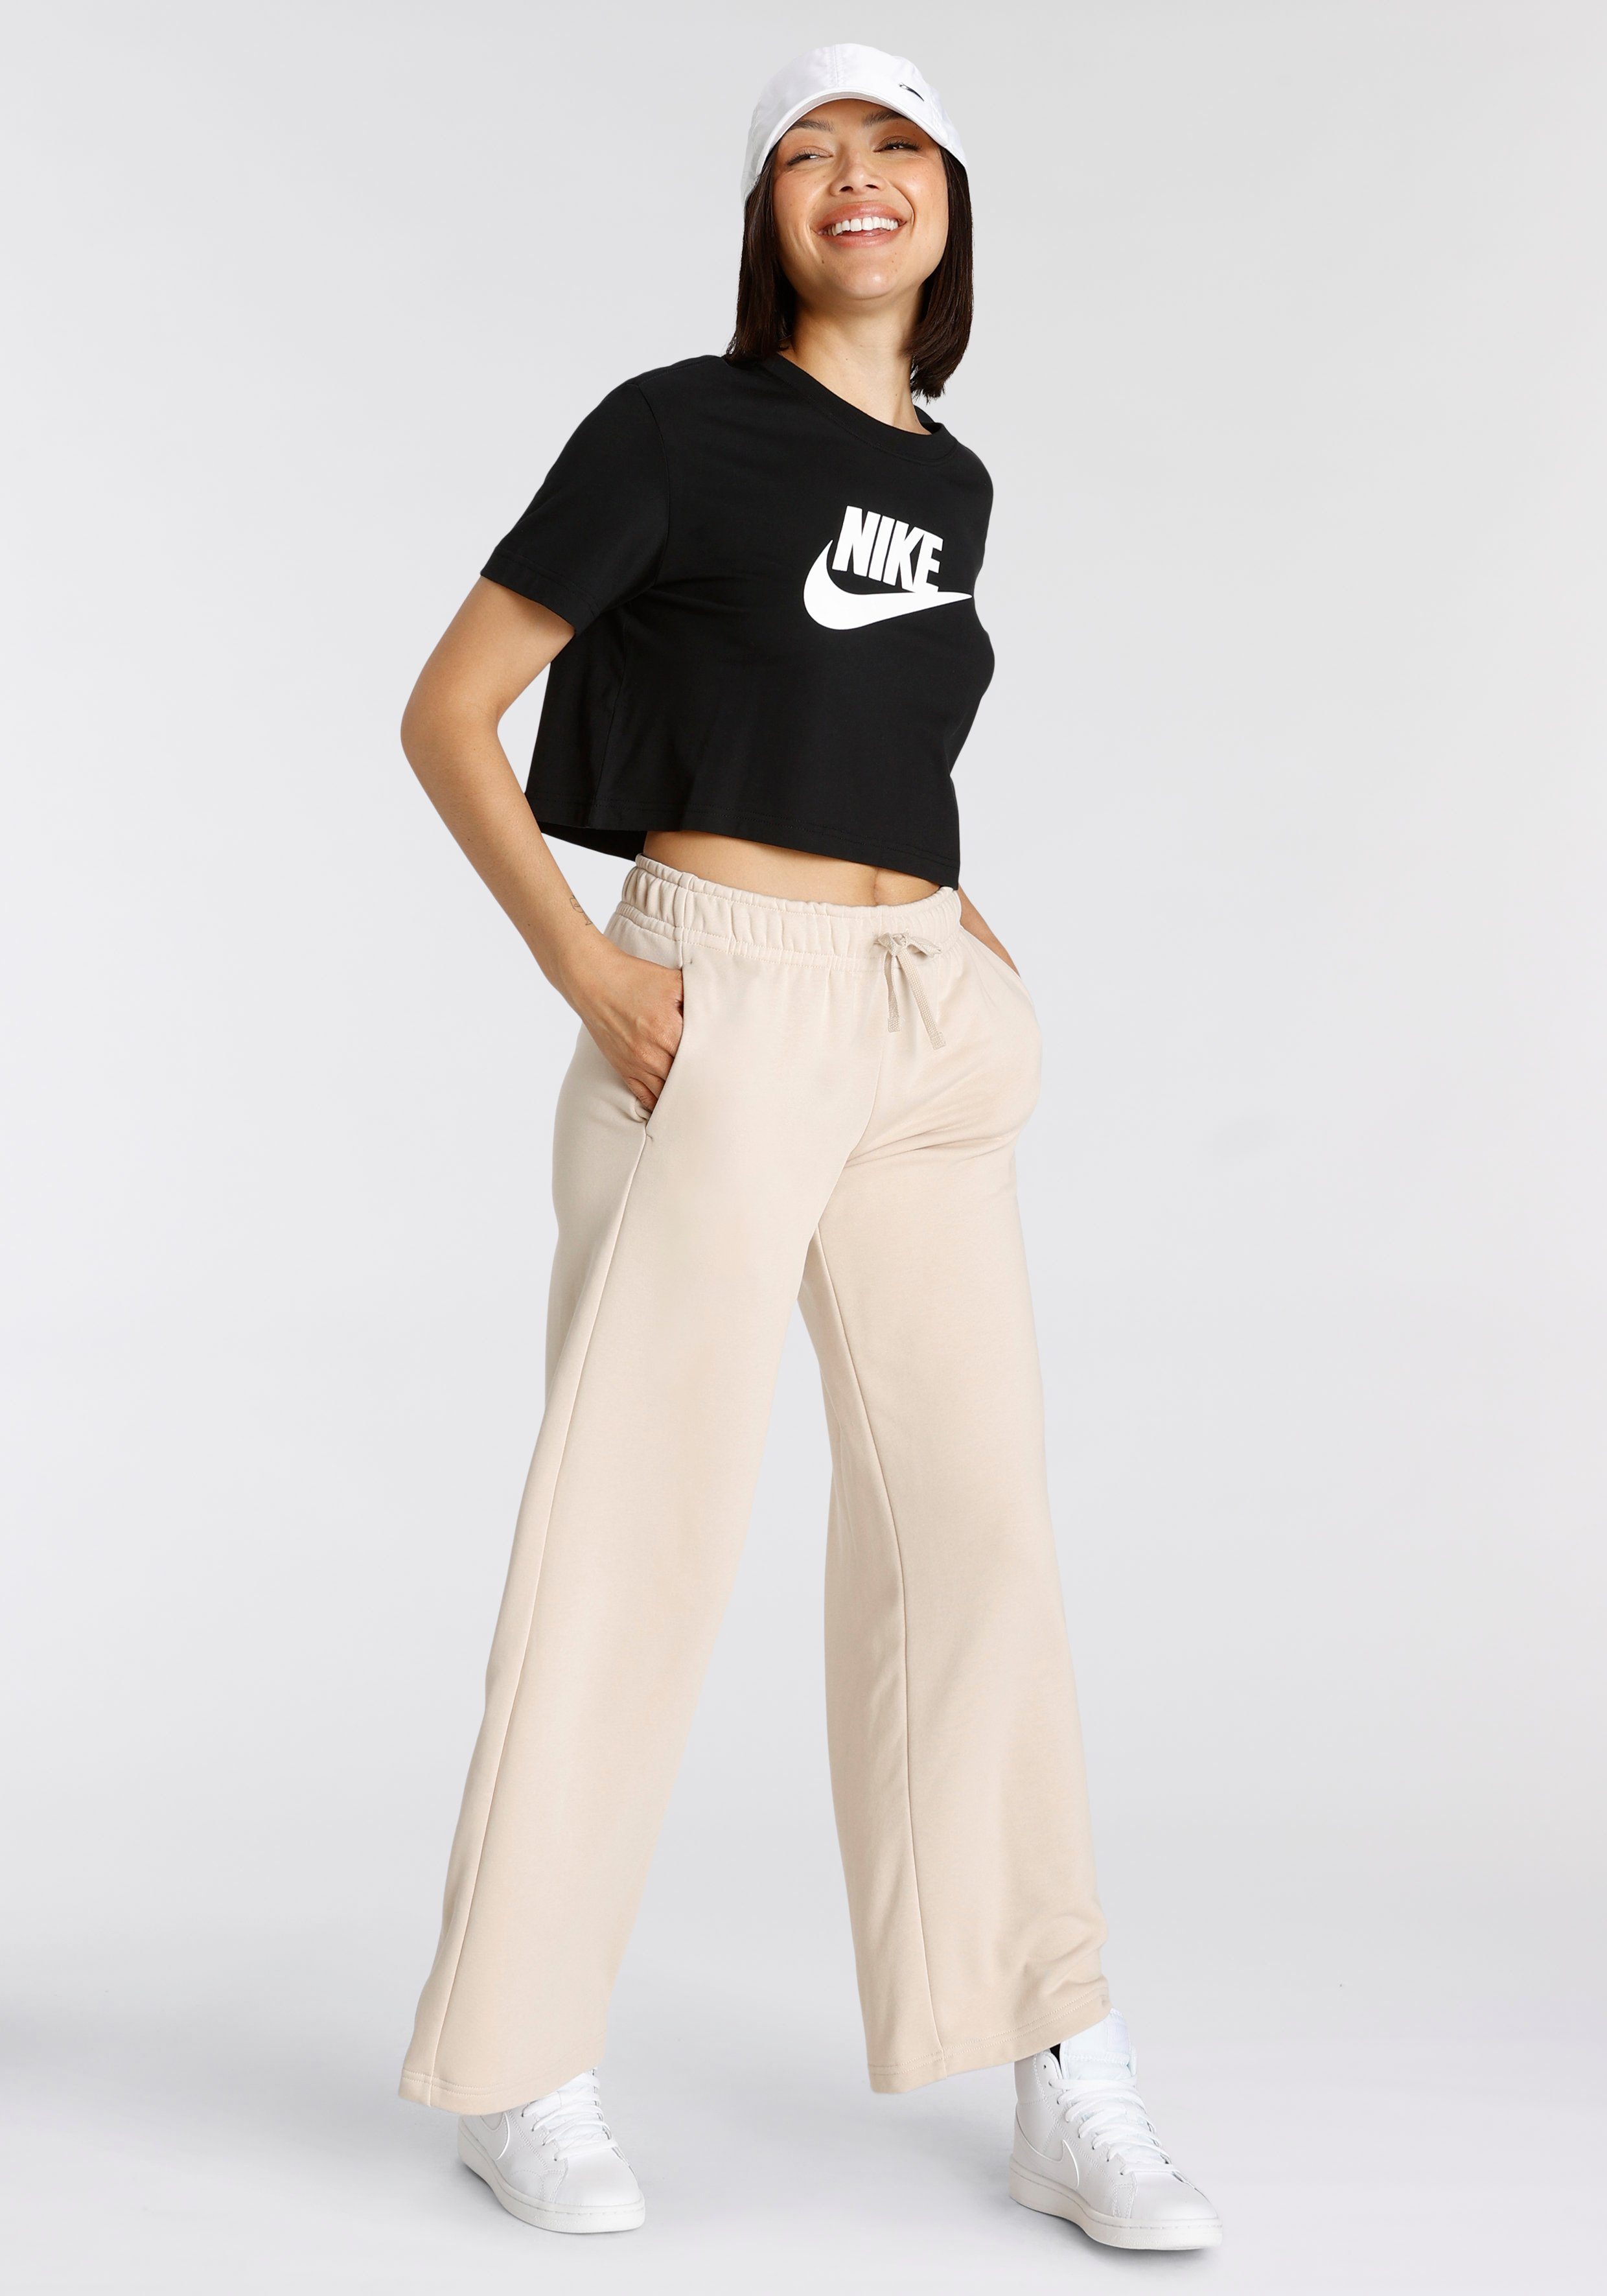 WOMEN'S T-SHIRT schwarzweiss ESSENTIAL T-Shirt Nike CROPPED Sportswear LOGO